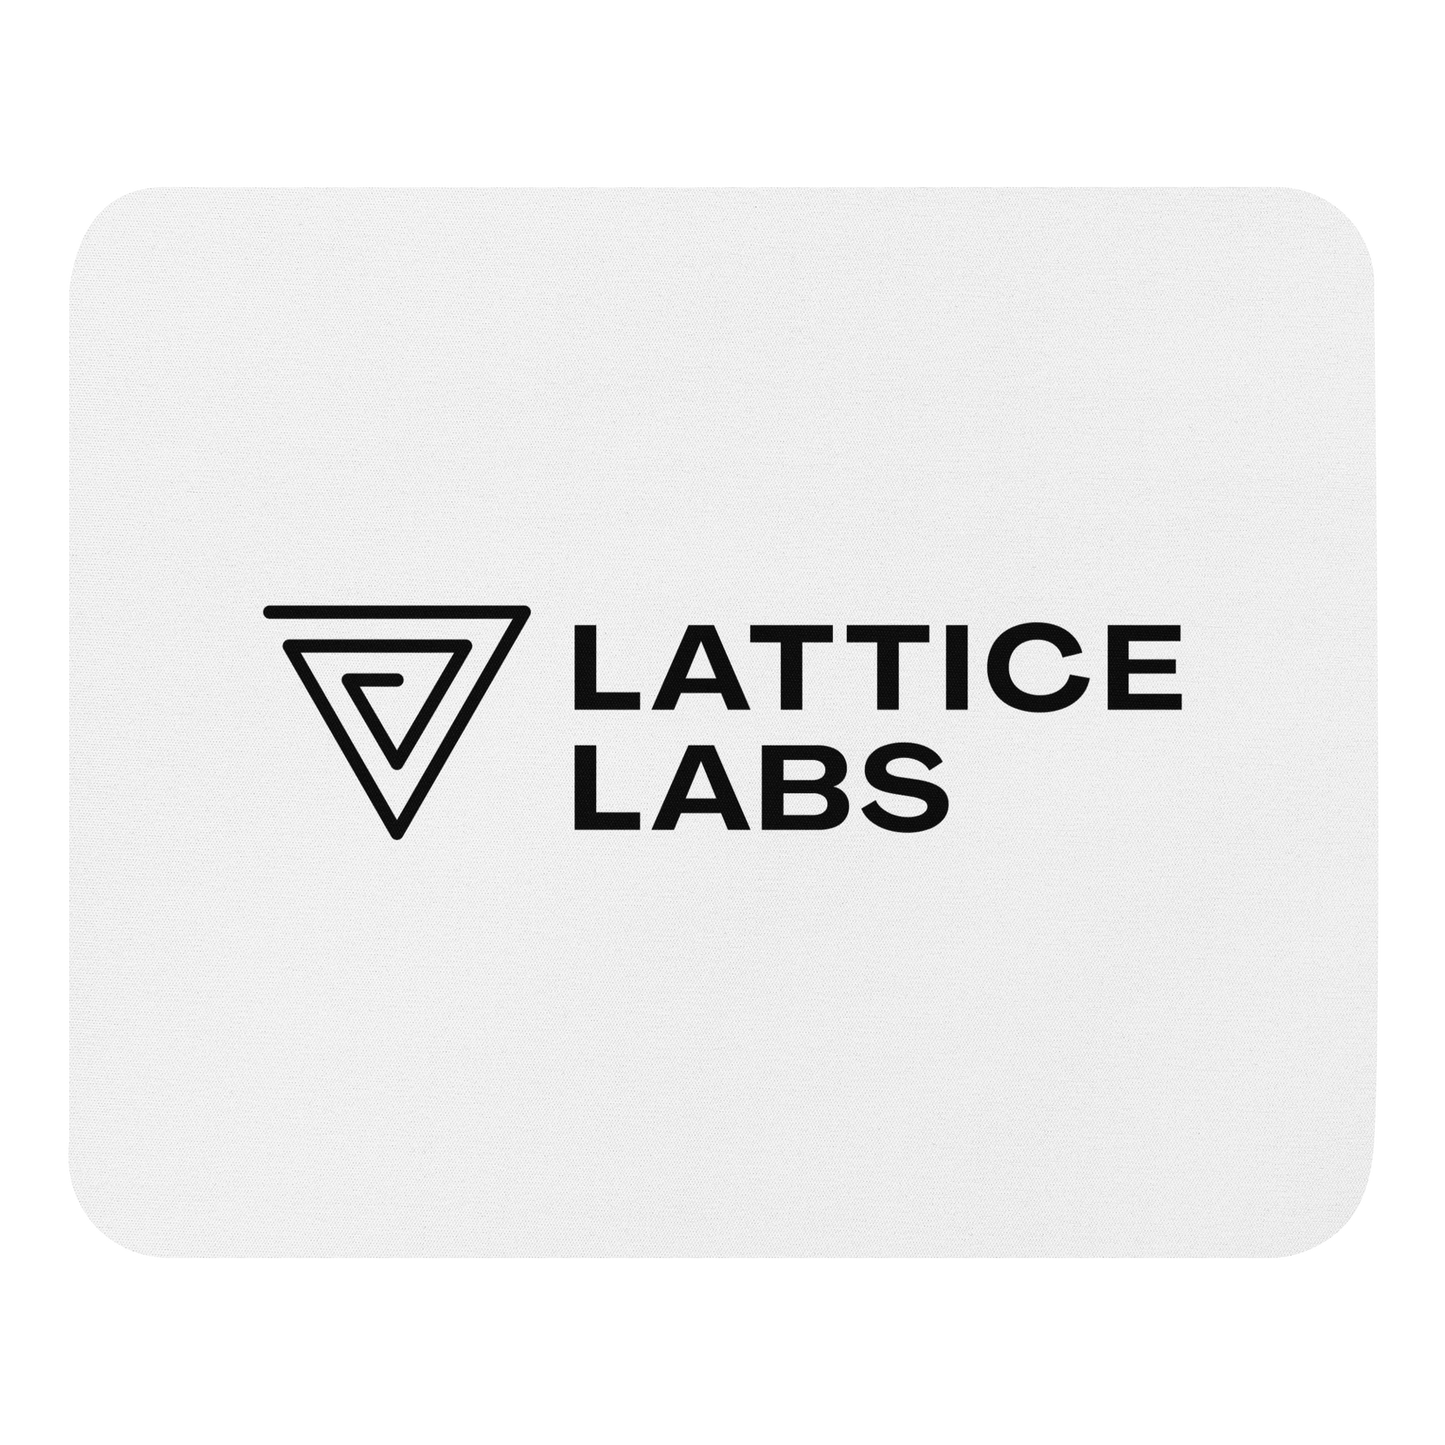 Lattice Labs Mouse pad